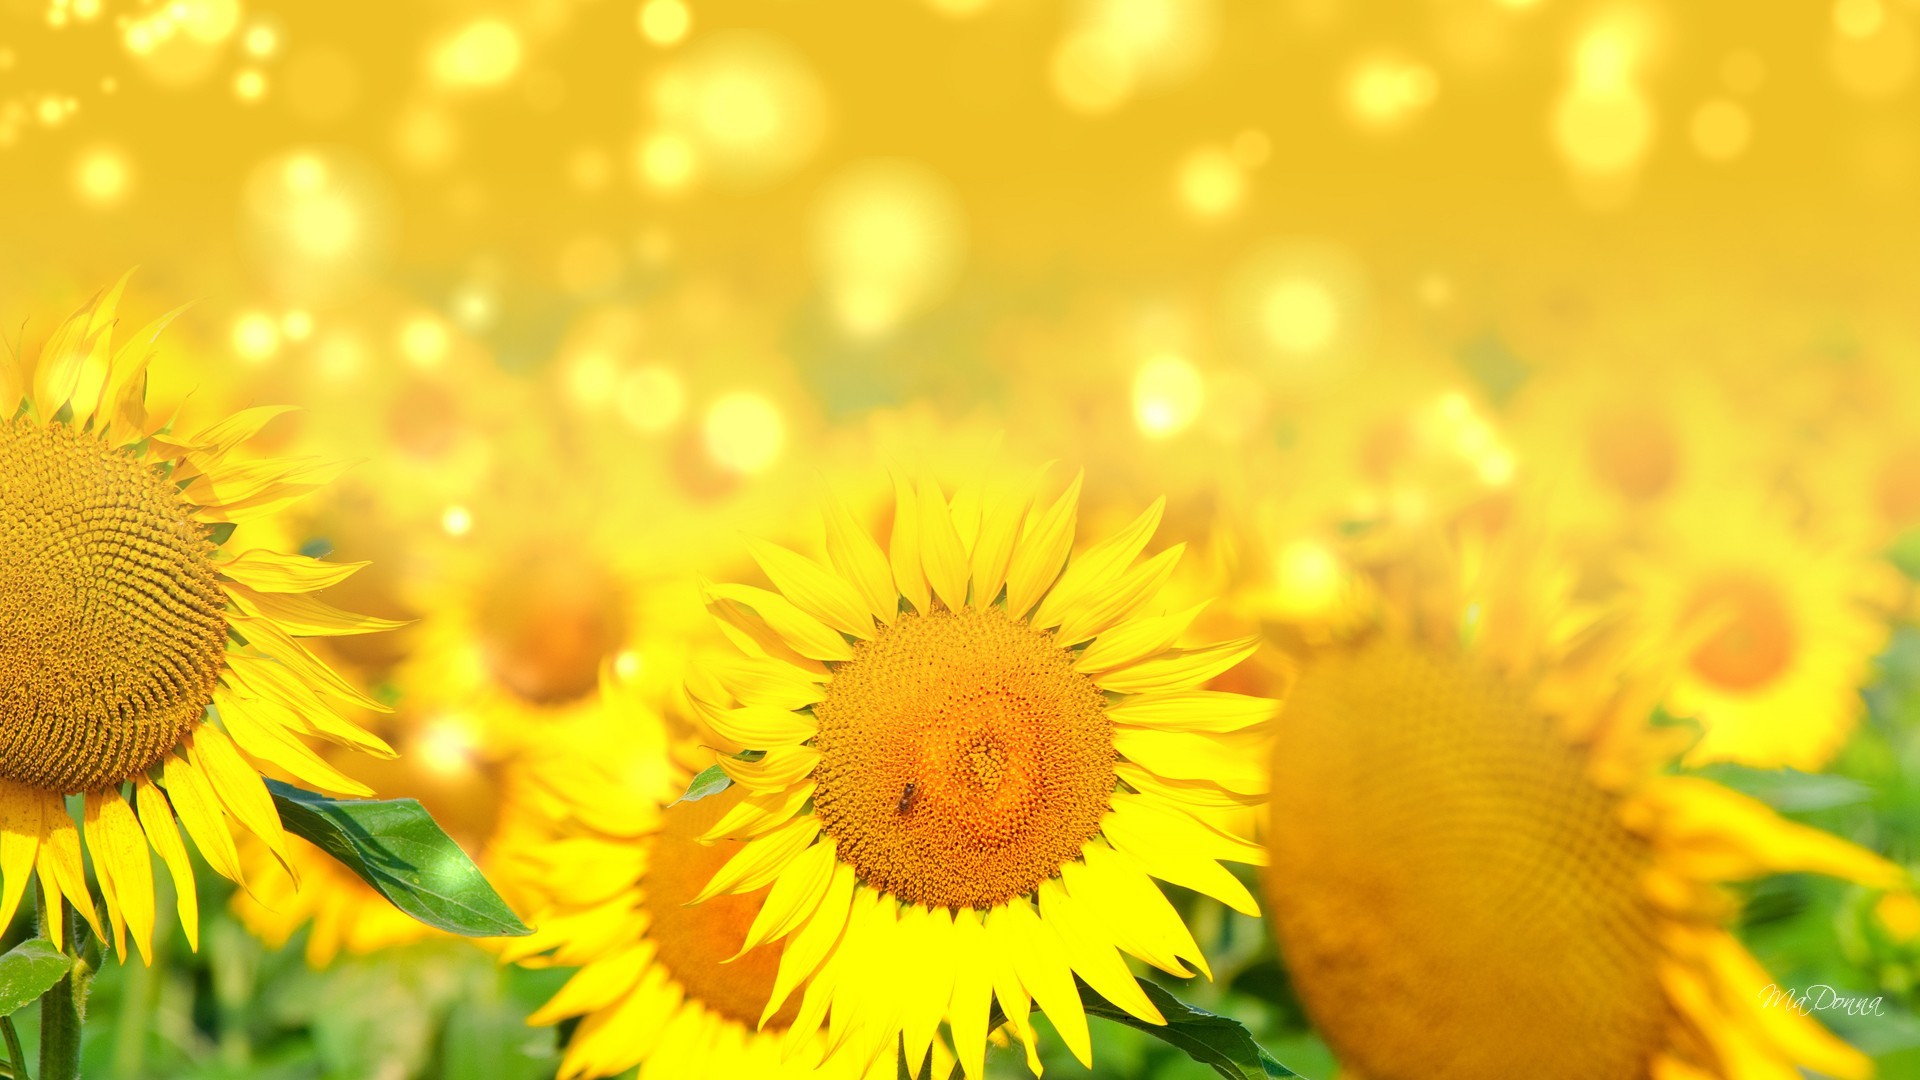 Yellow Sunflowers Sparkles Stars Flowers Bright Autumn Fall Glow ...